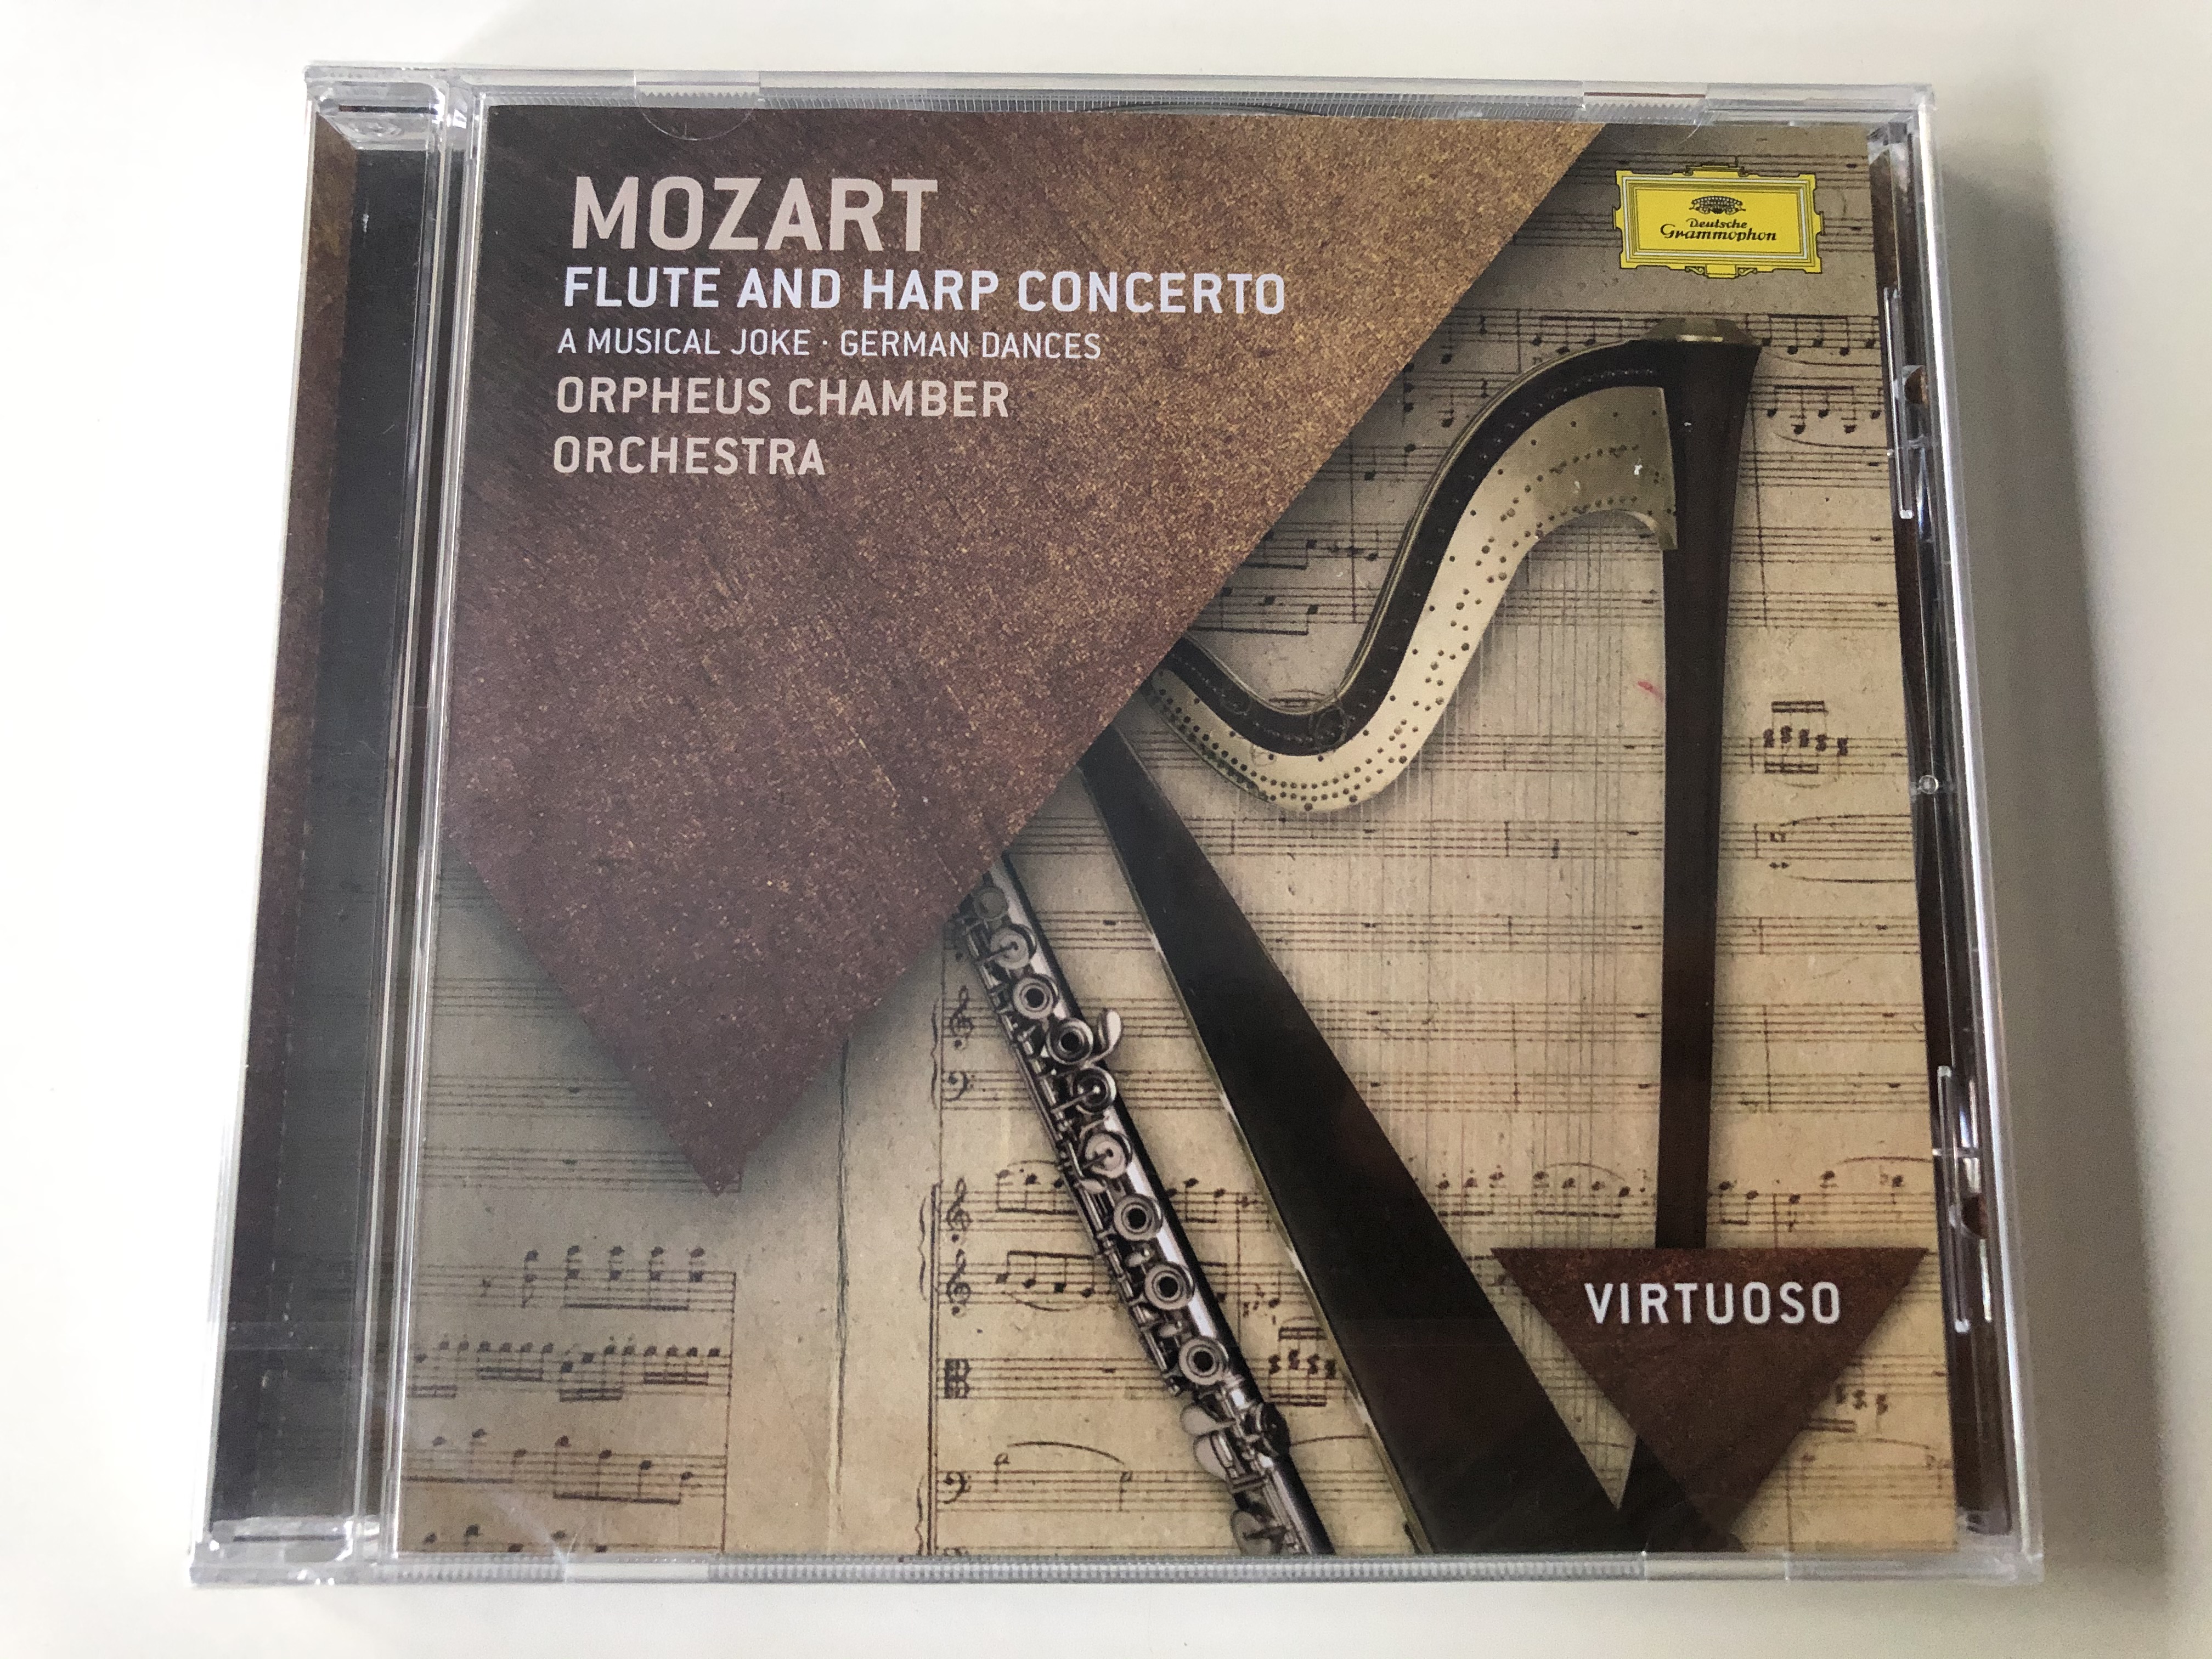 mozart-flute-and-harp-concerto-a-musical-joke-german-dances-orpheus-chamber-orchestra-virtuoso-deutsche-grammophon-audio-cd-2014-478-7899-1-.jpg